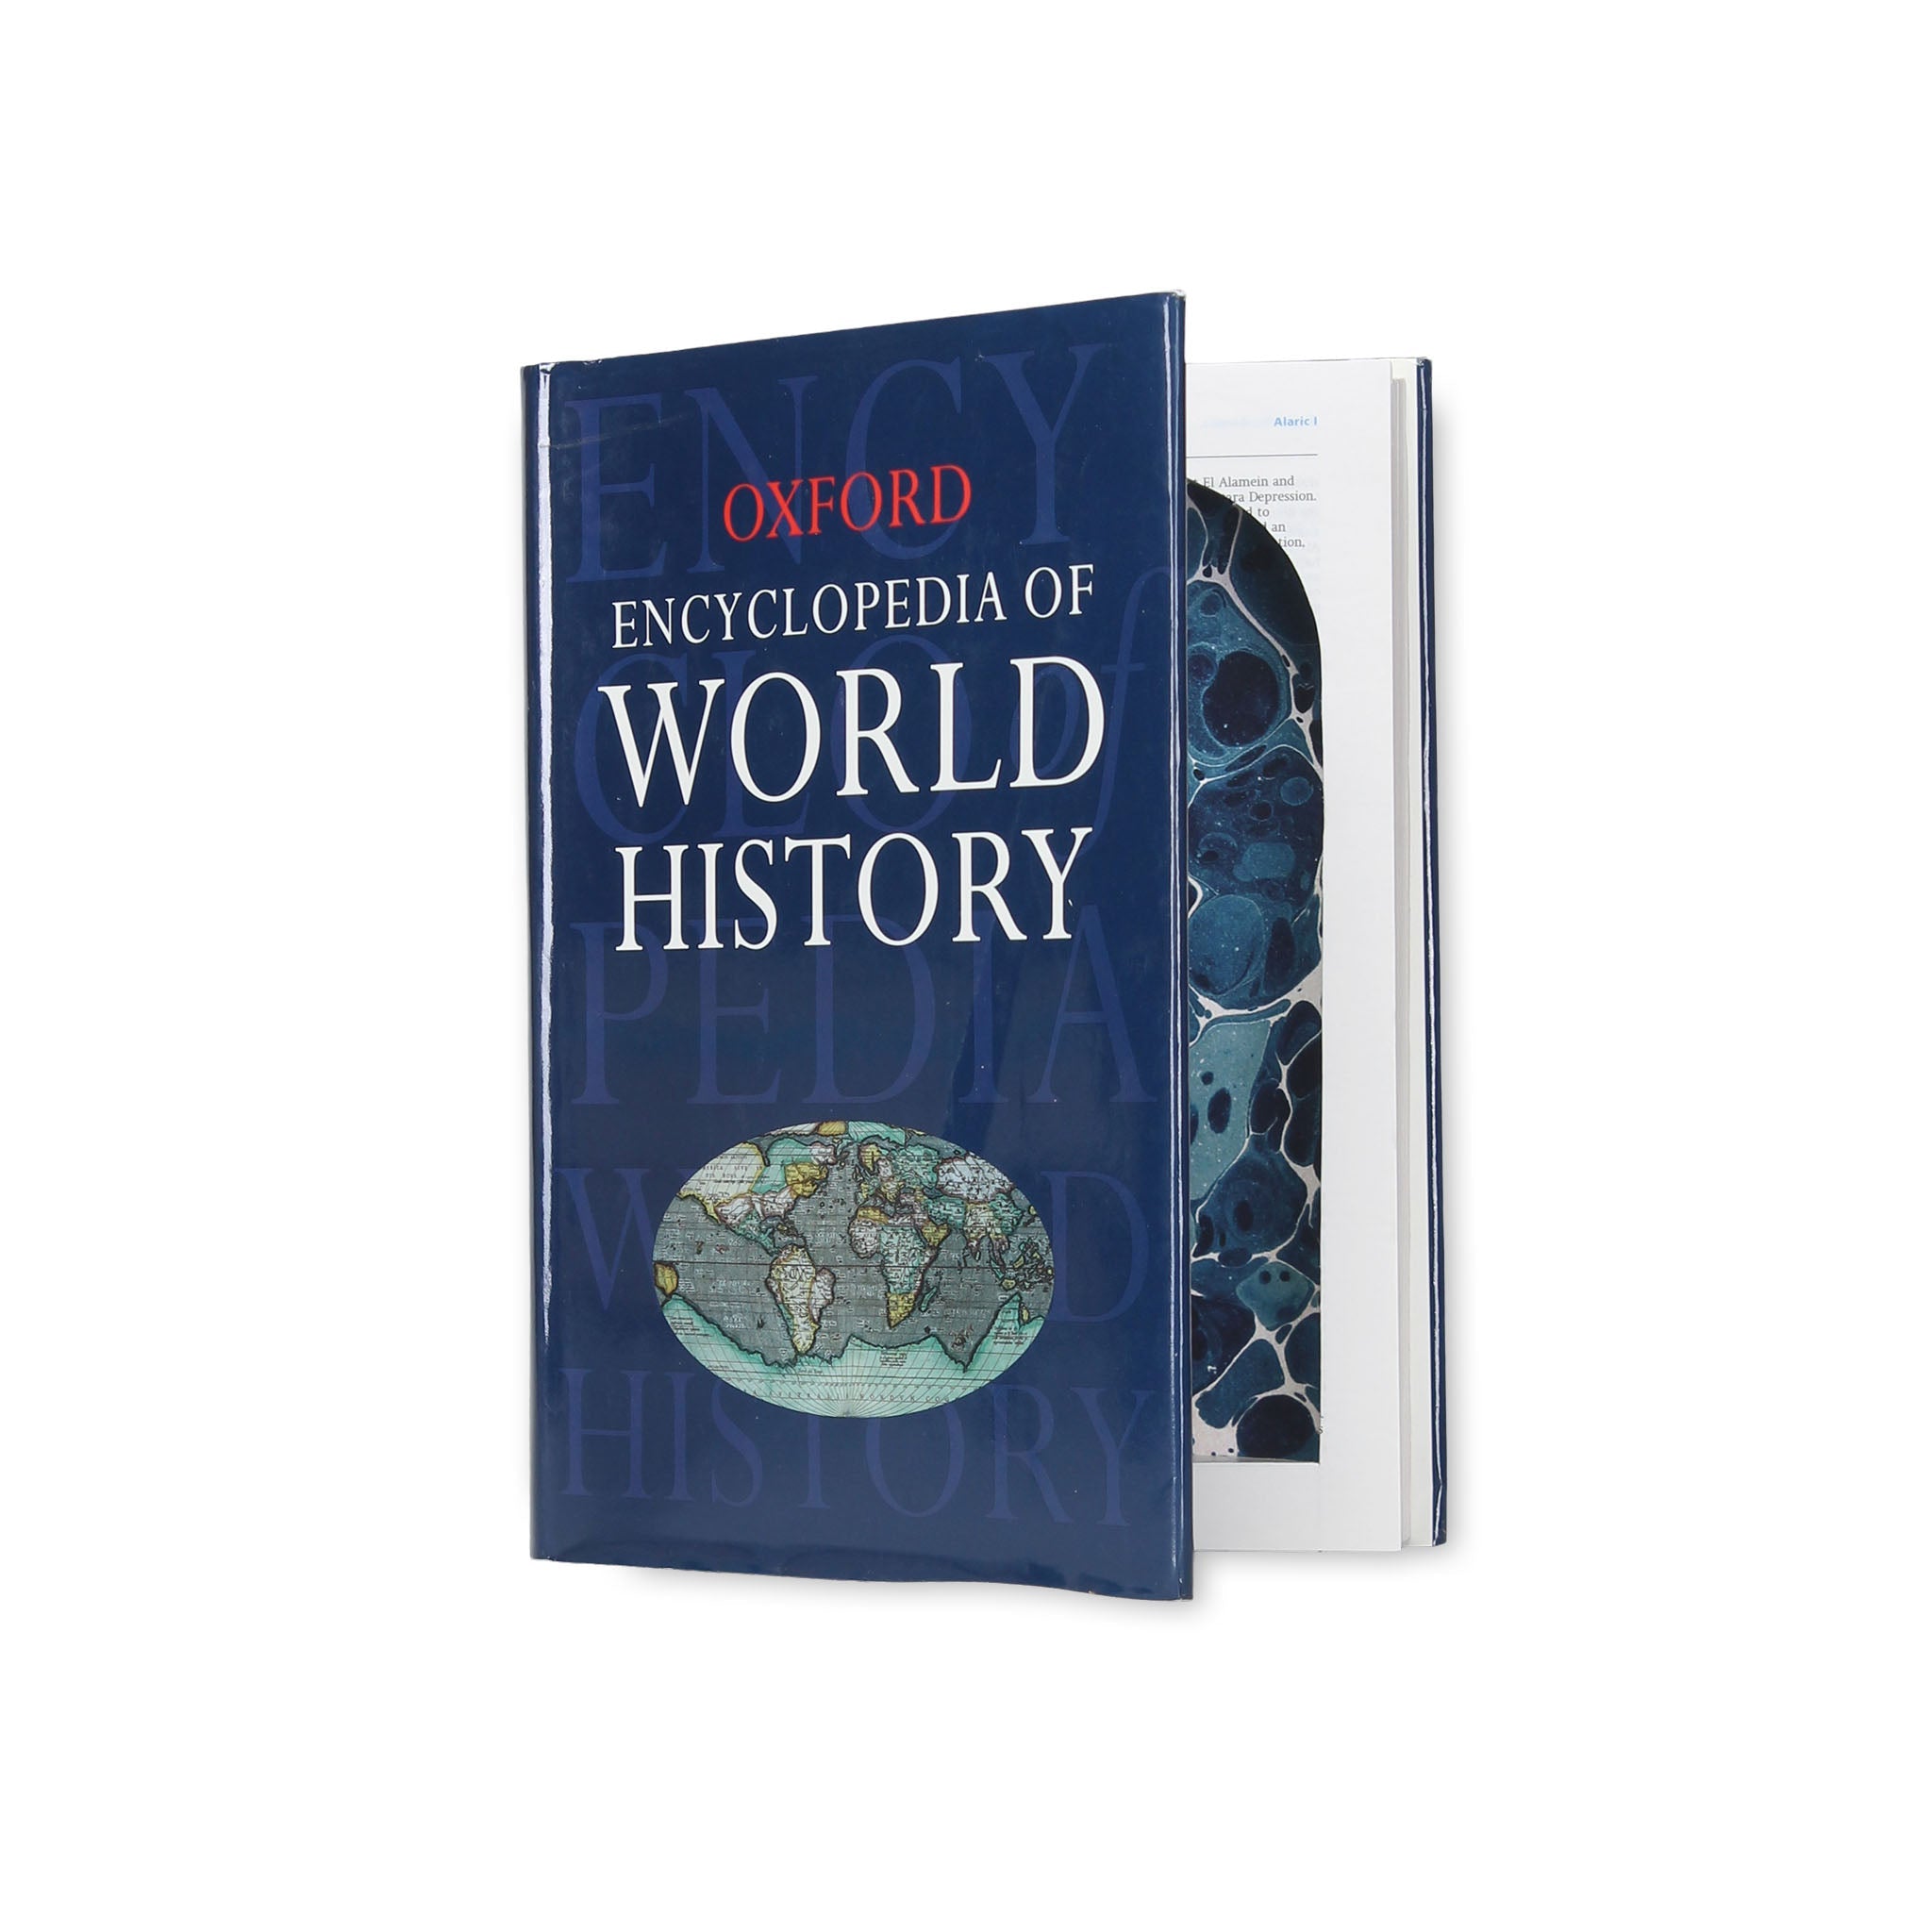 Oxford Encyclopedia of World History - XL Hollow Book Safe - Secret Storage Books